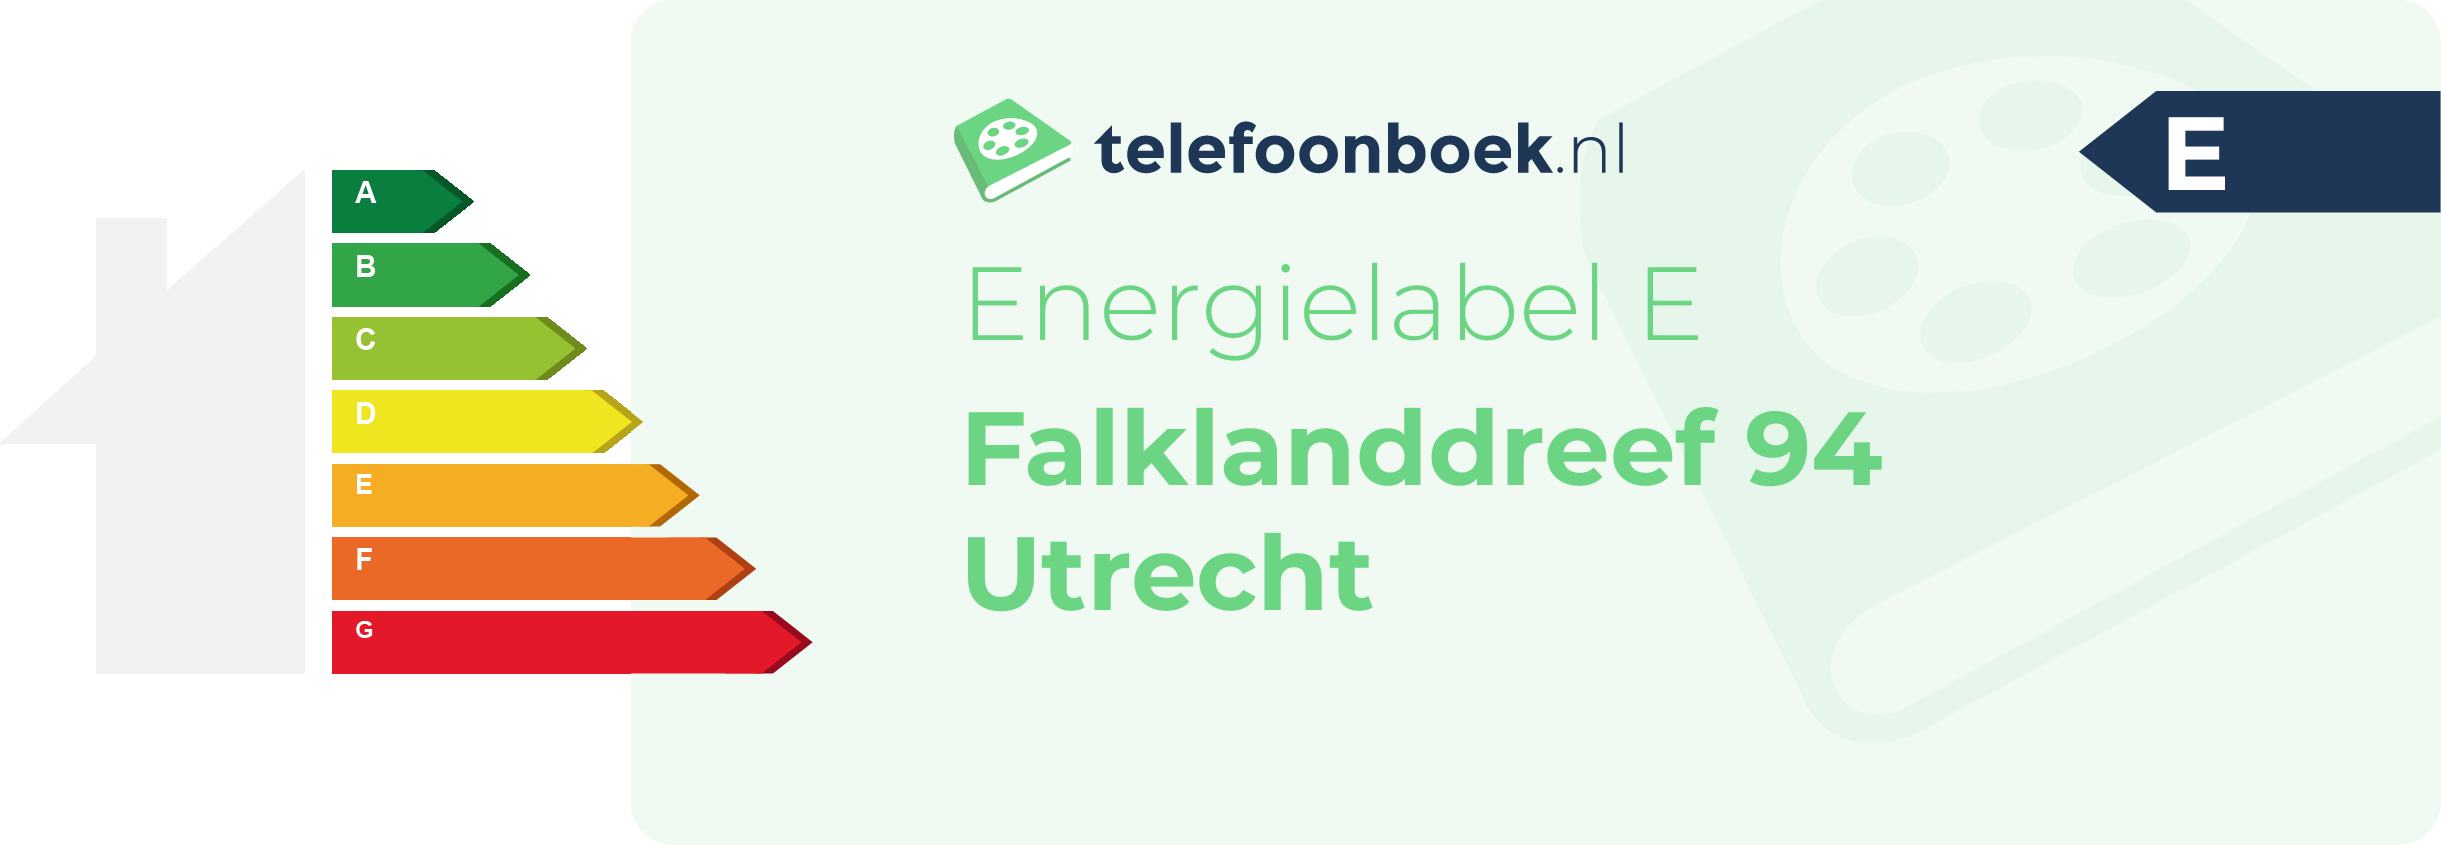 Energielabel Falklanddreef 94 Utrecht